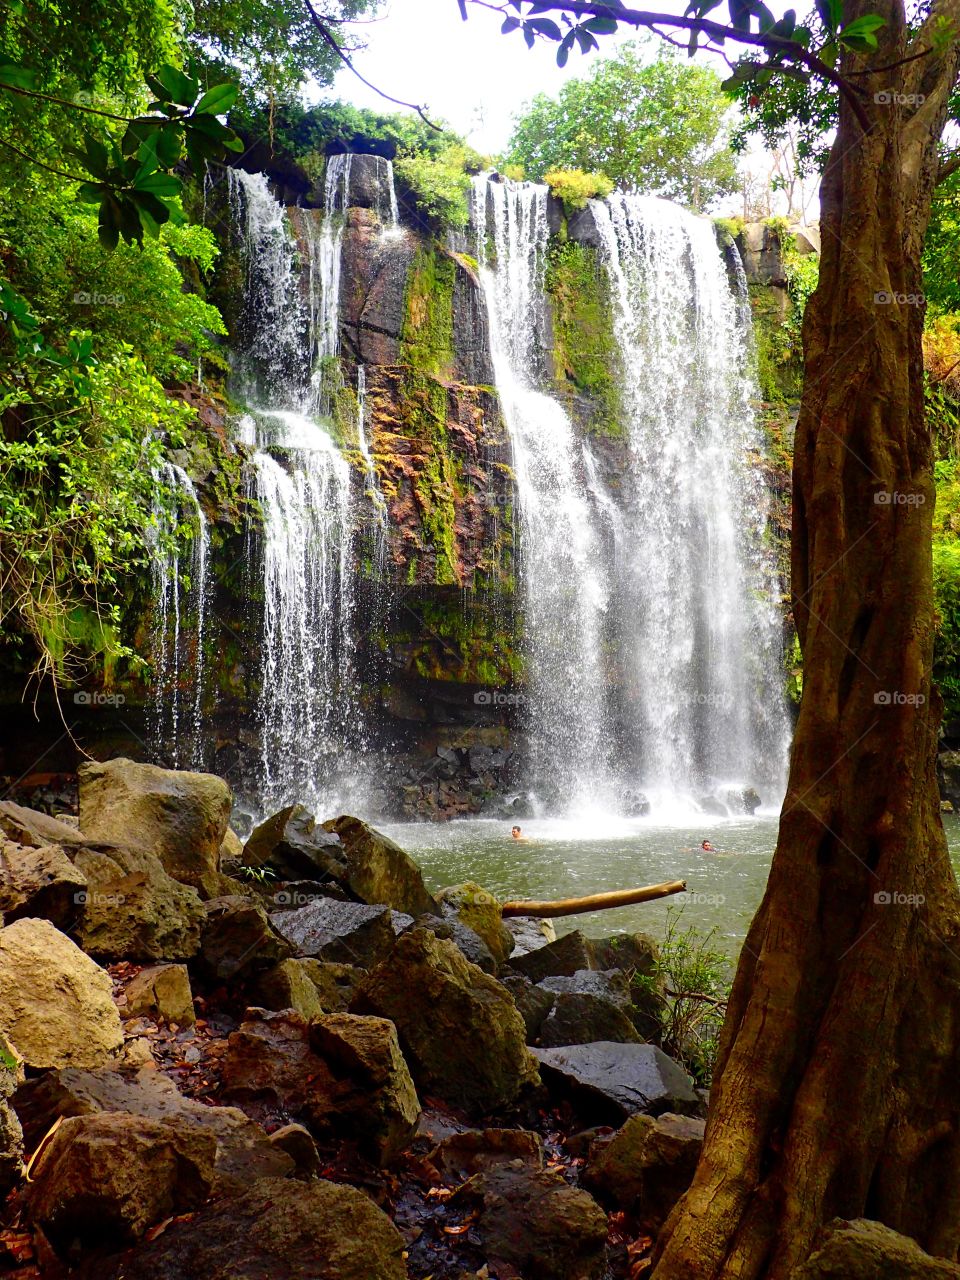 Waterfalls in the jungle